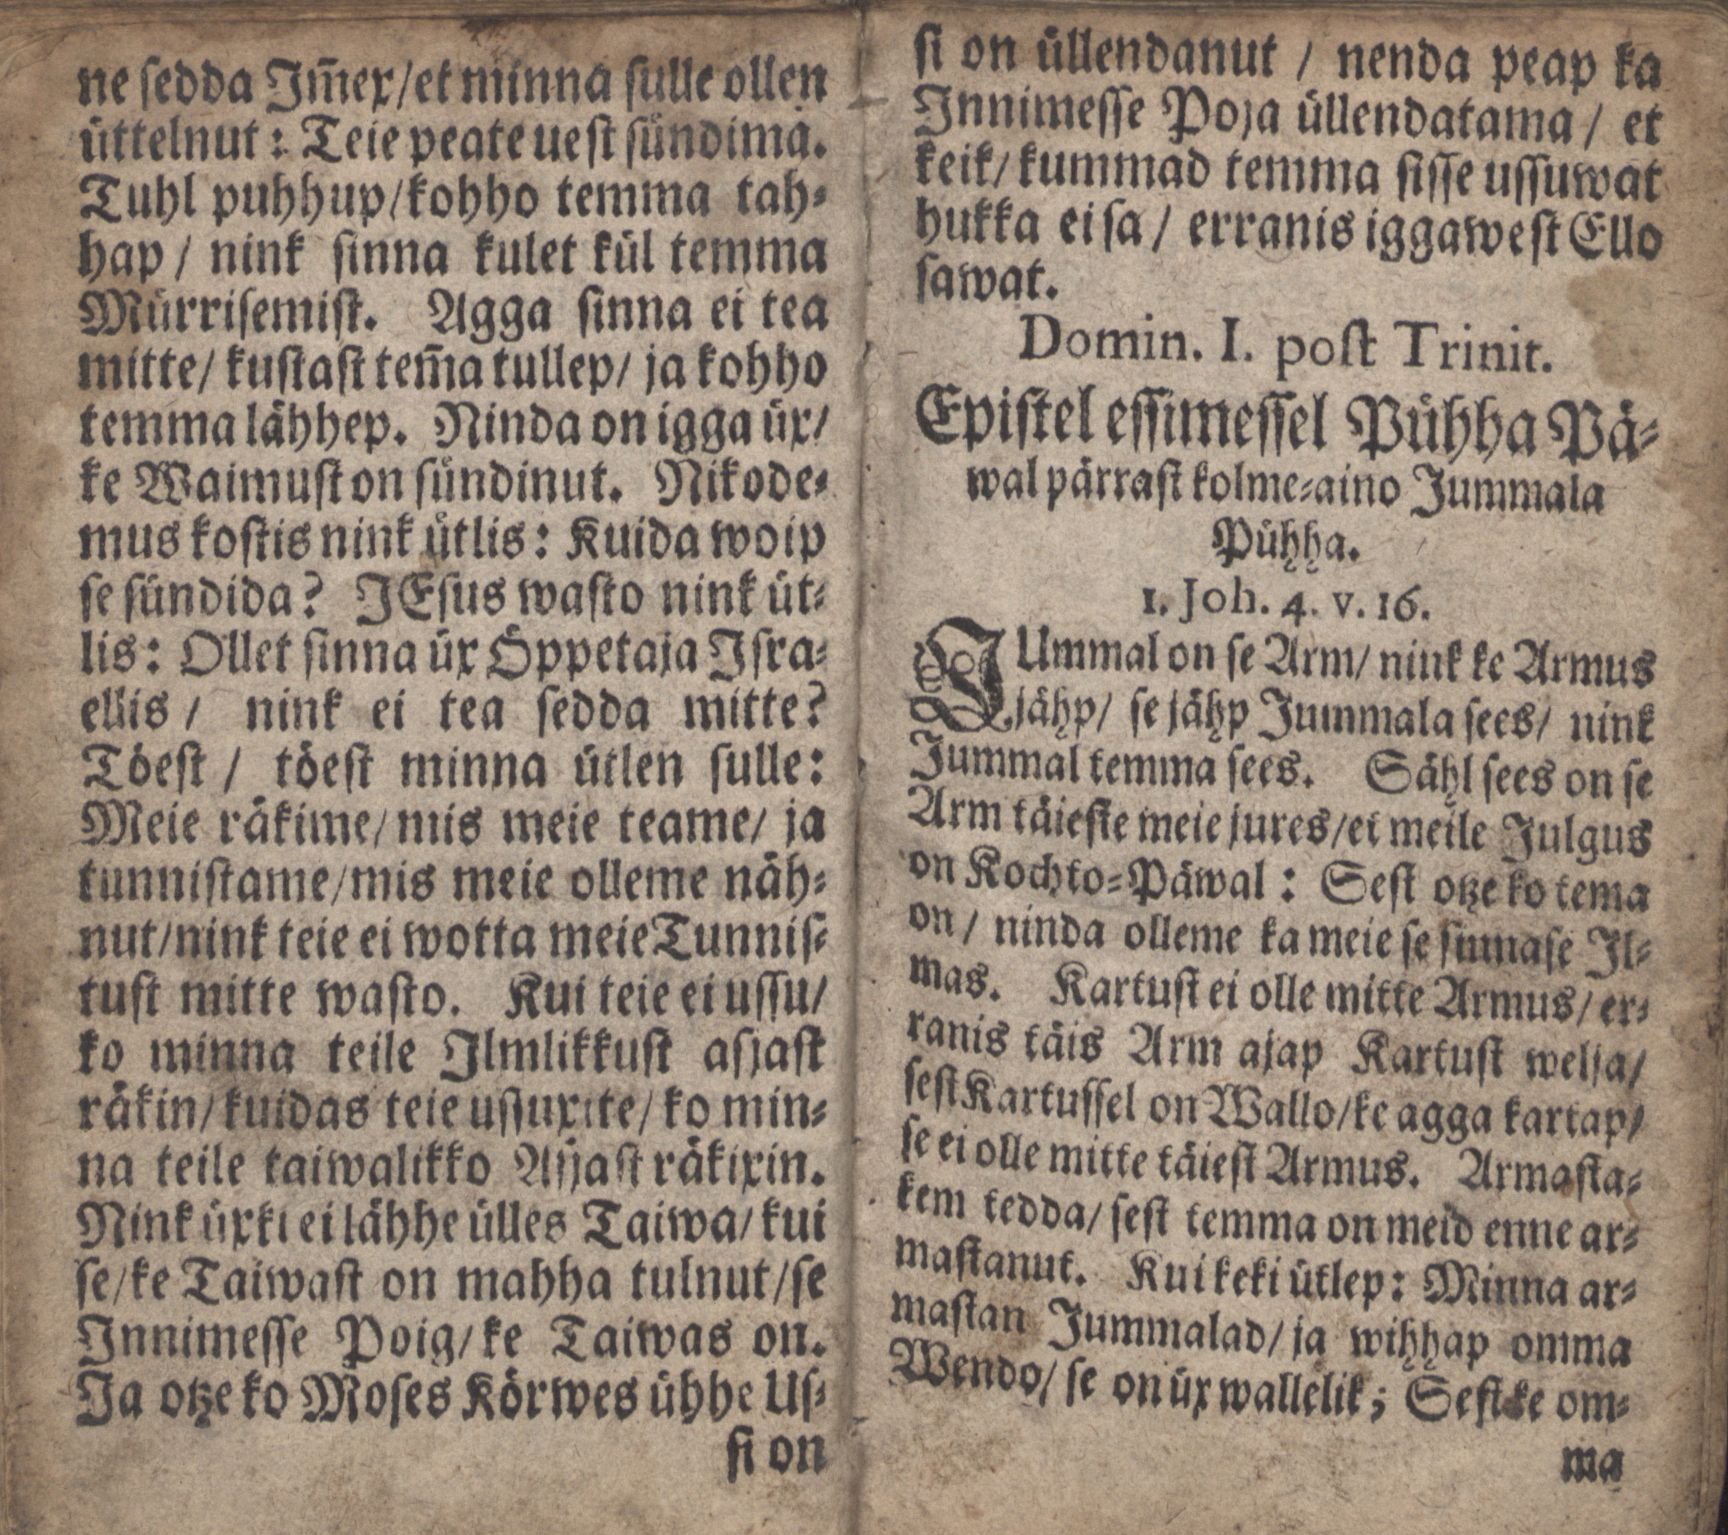 Ewangeliummit Nink Epistlit (1700) | 57. Основной текст